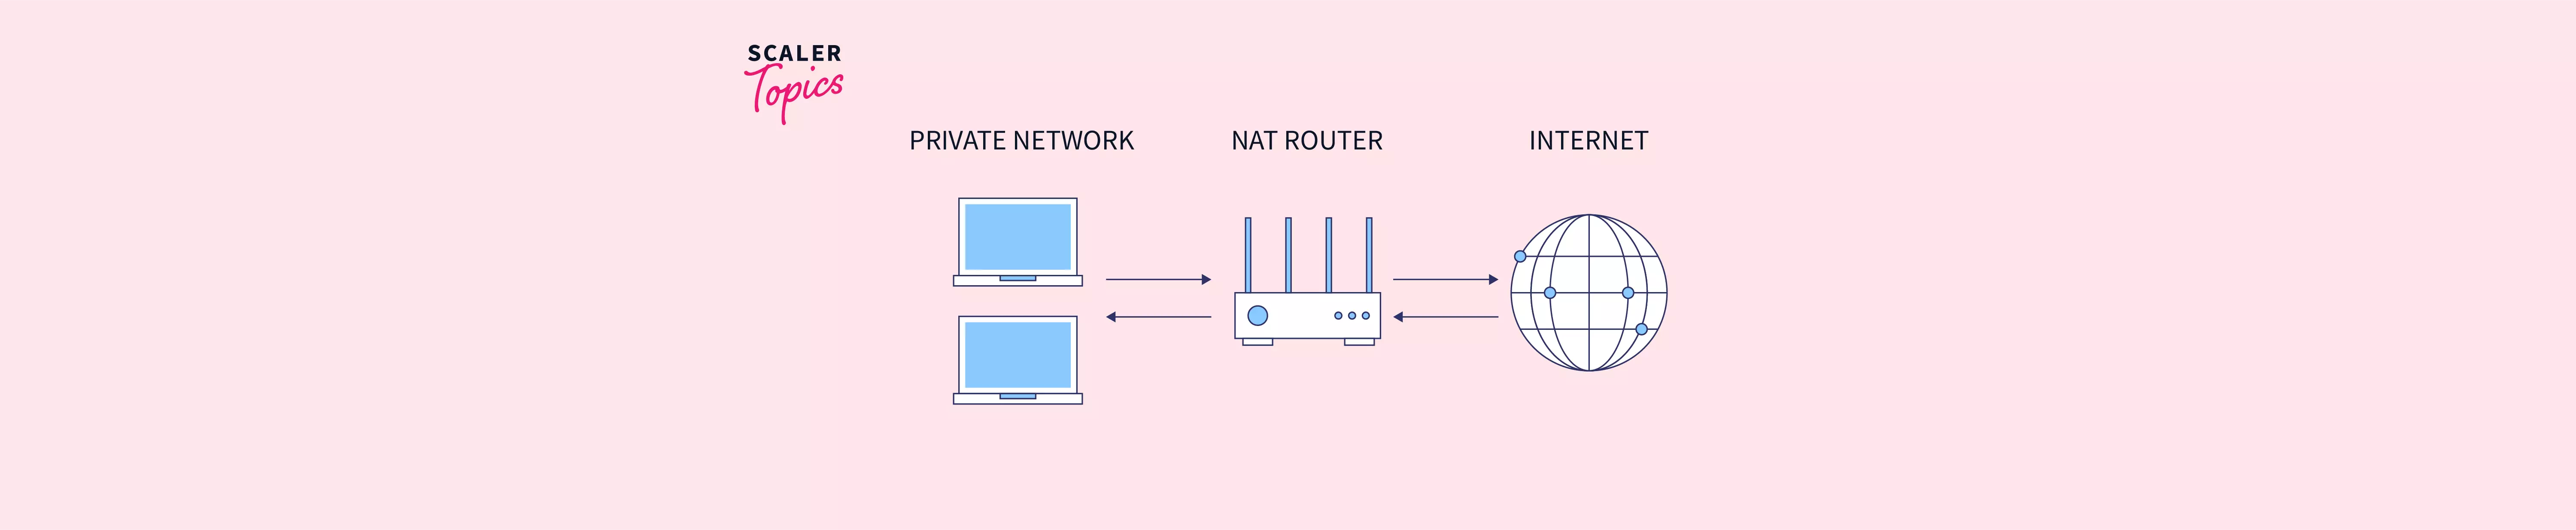 Network Address Translation (NAT) - Scaler Topics